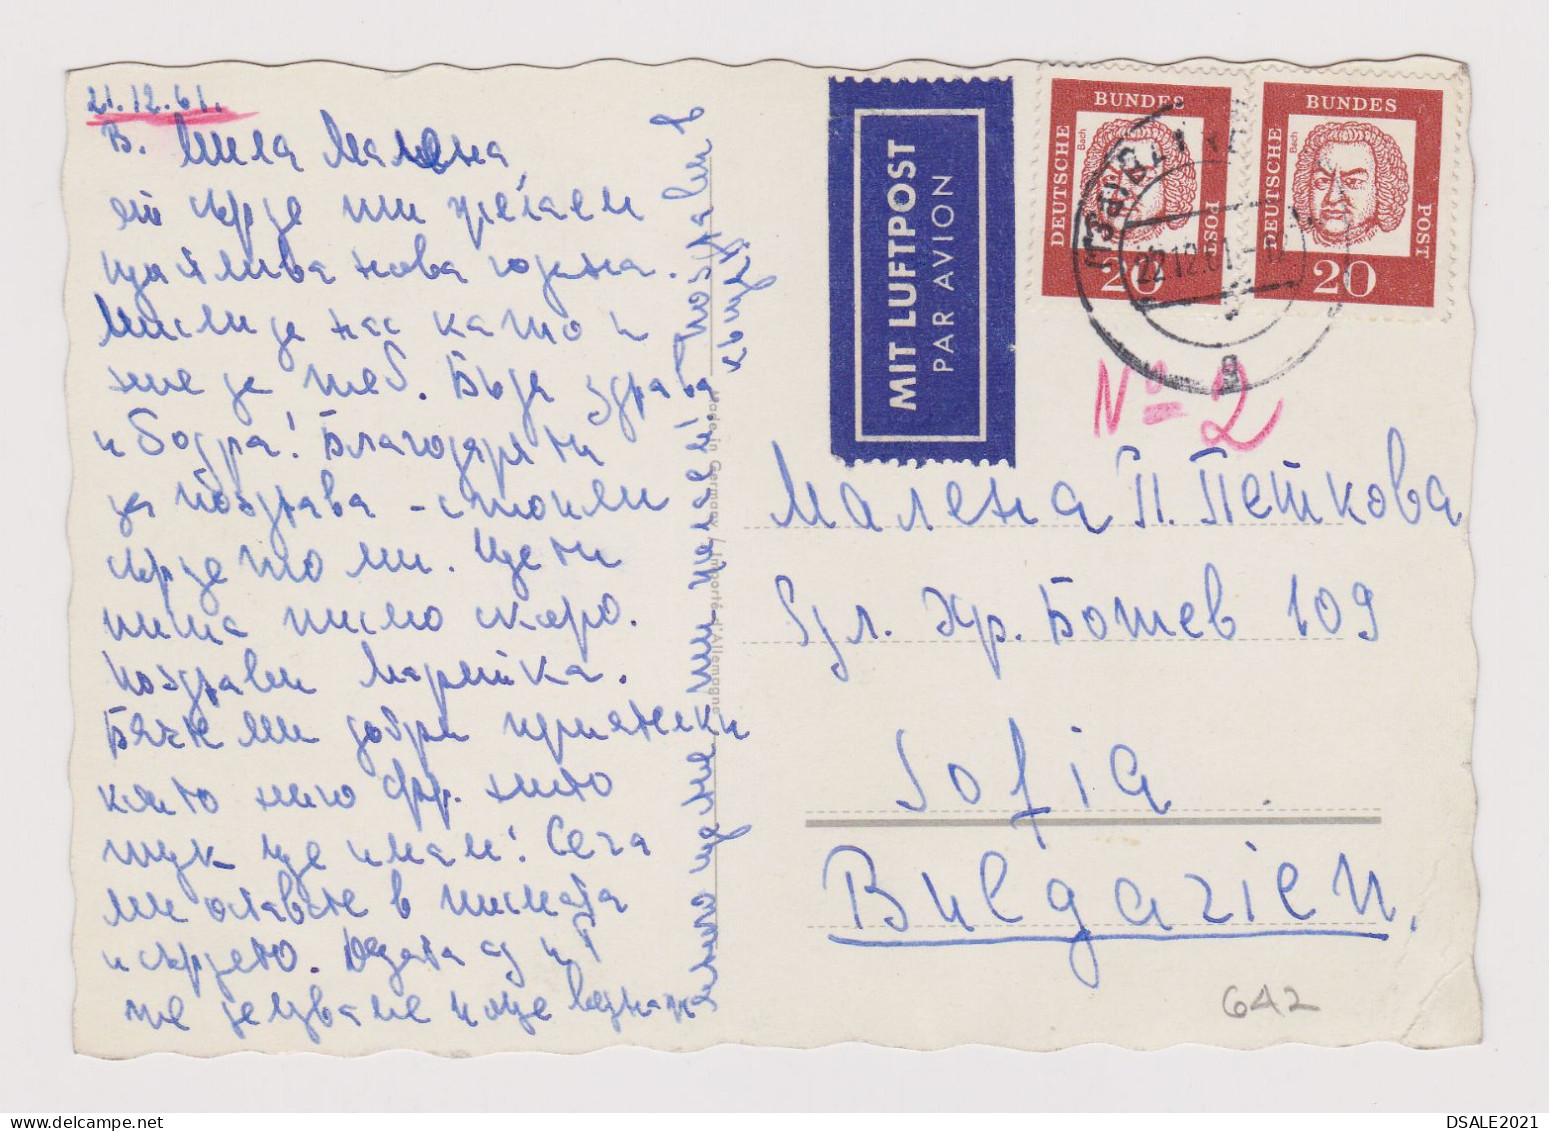 Germany Bundes 1960s Postcard W/2x20Pf Topic Stamps Composer BACH Sent Airmail To Sofia-Bulgaria (642) - Briefe U. Dokumente